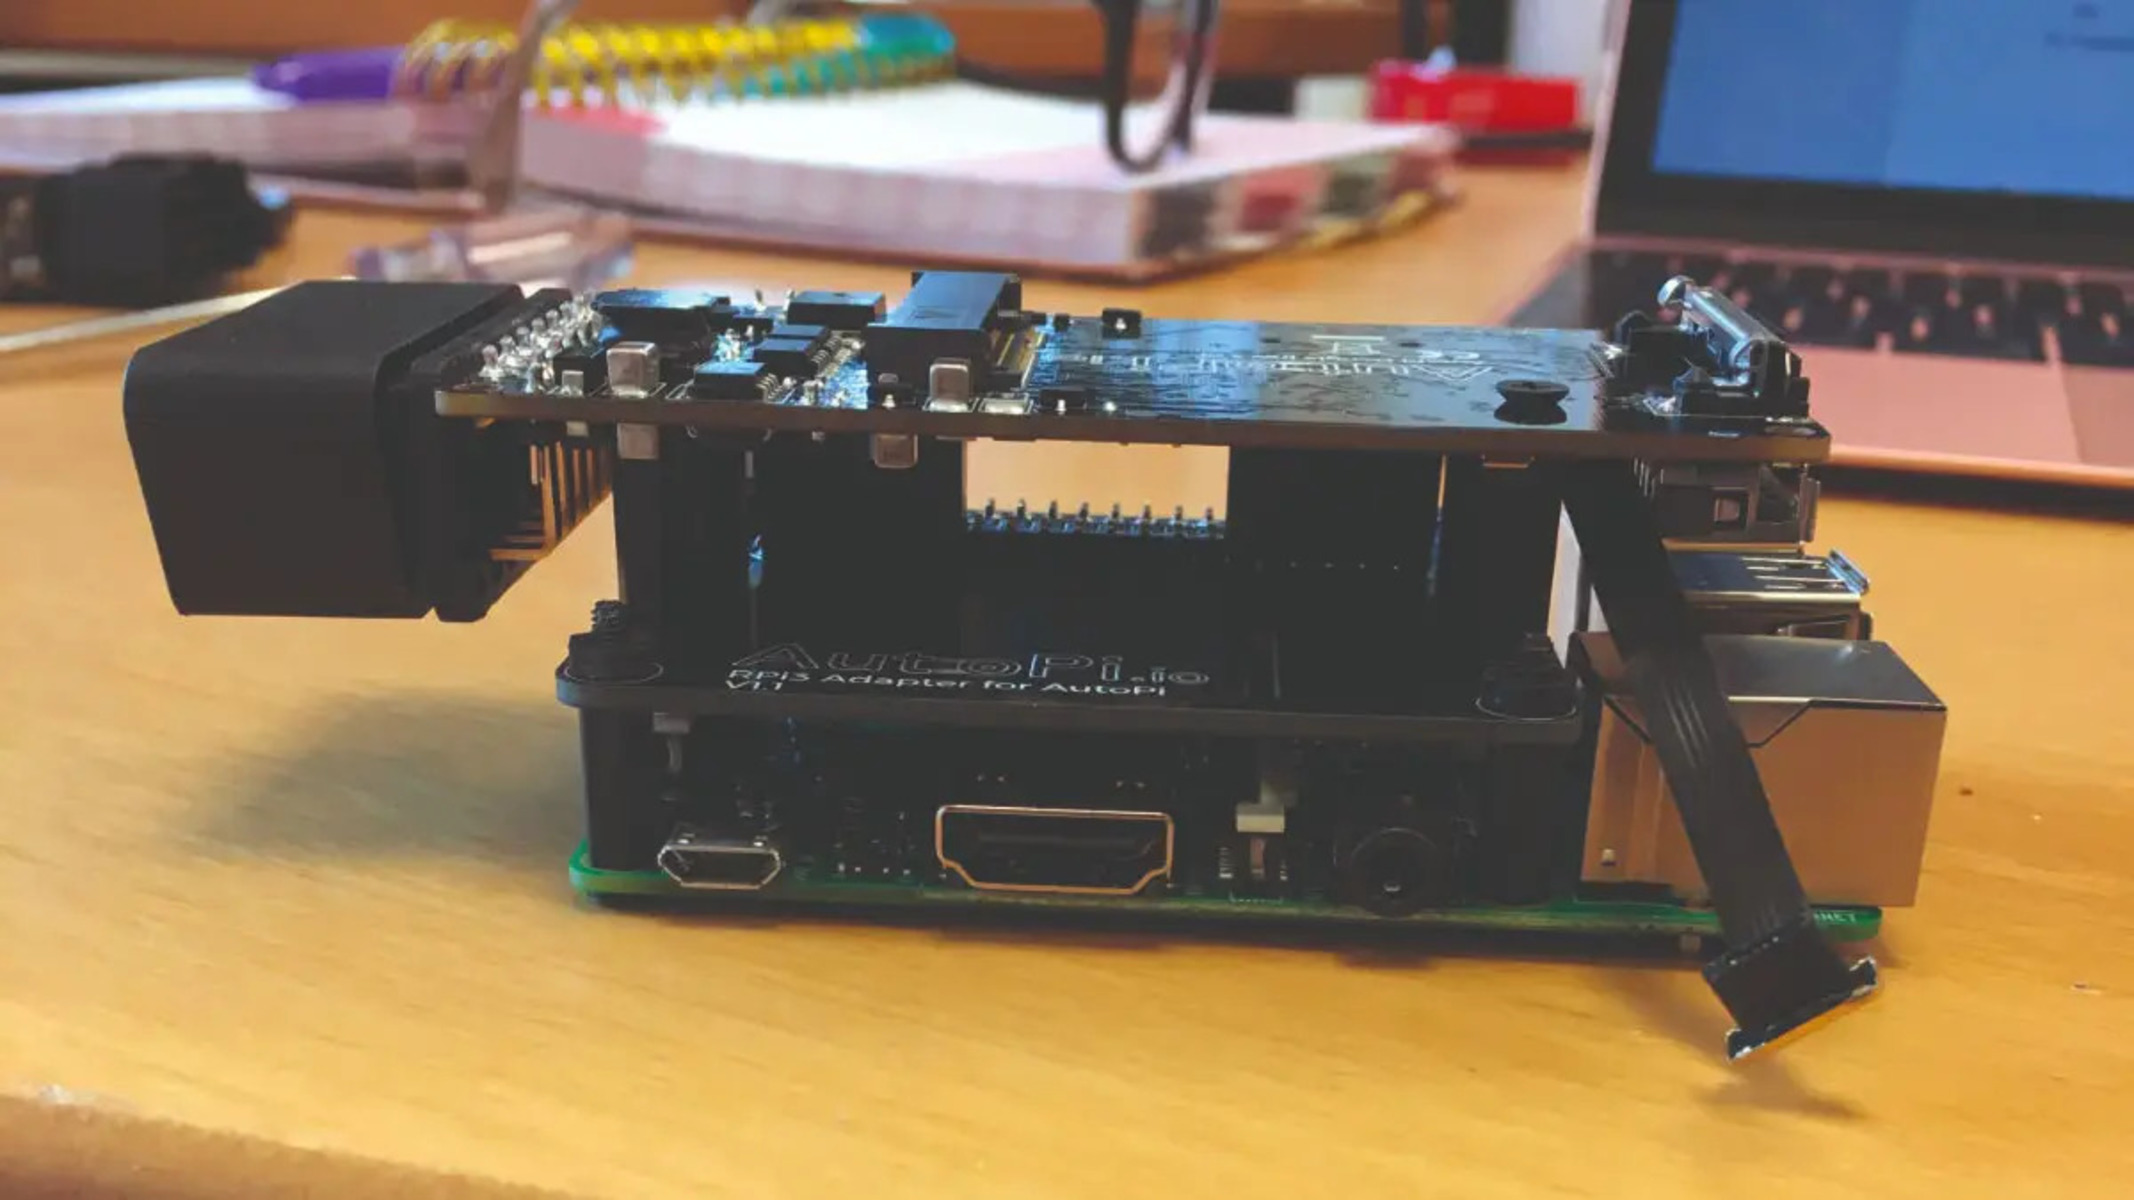 diy-carputer-hardware-from-laptops-to-raspberry-pi